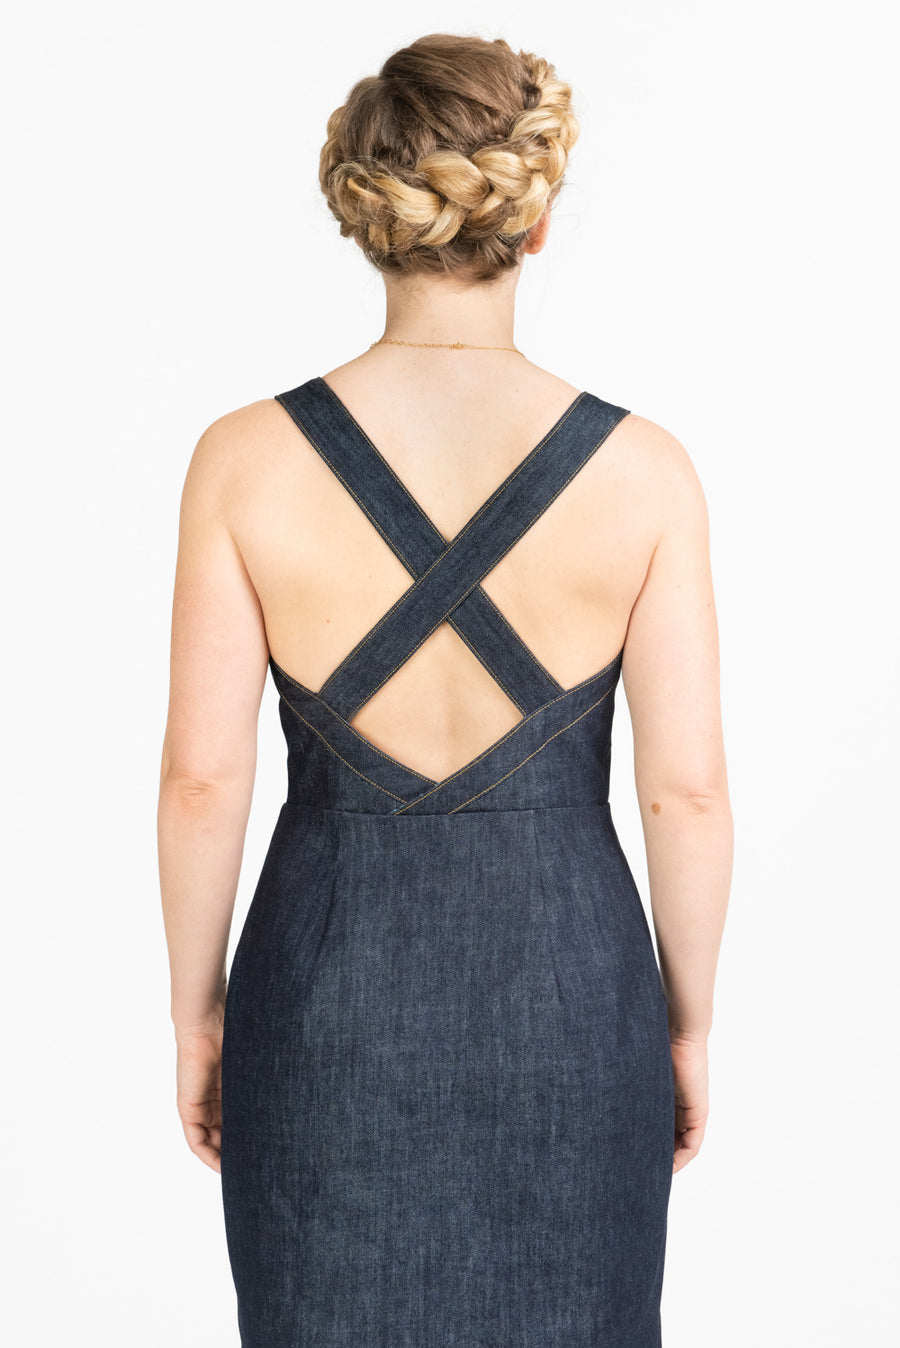 Fiona Sundress Pattern // Strappy backless summer dress pattern // Closet Core Patterns